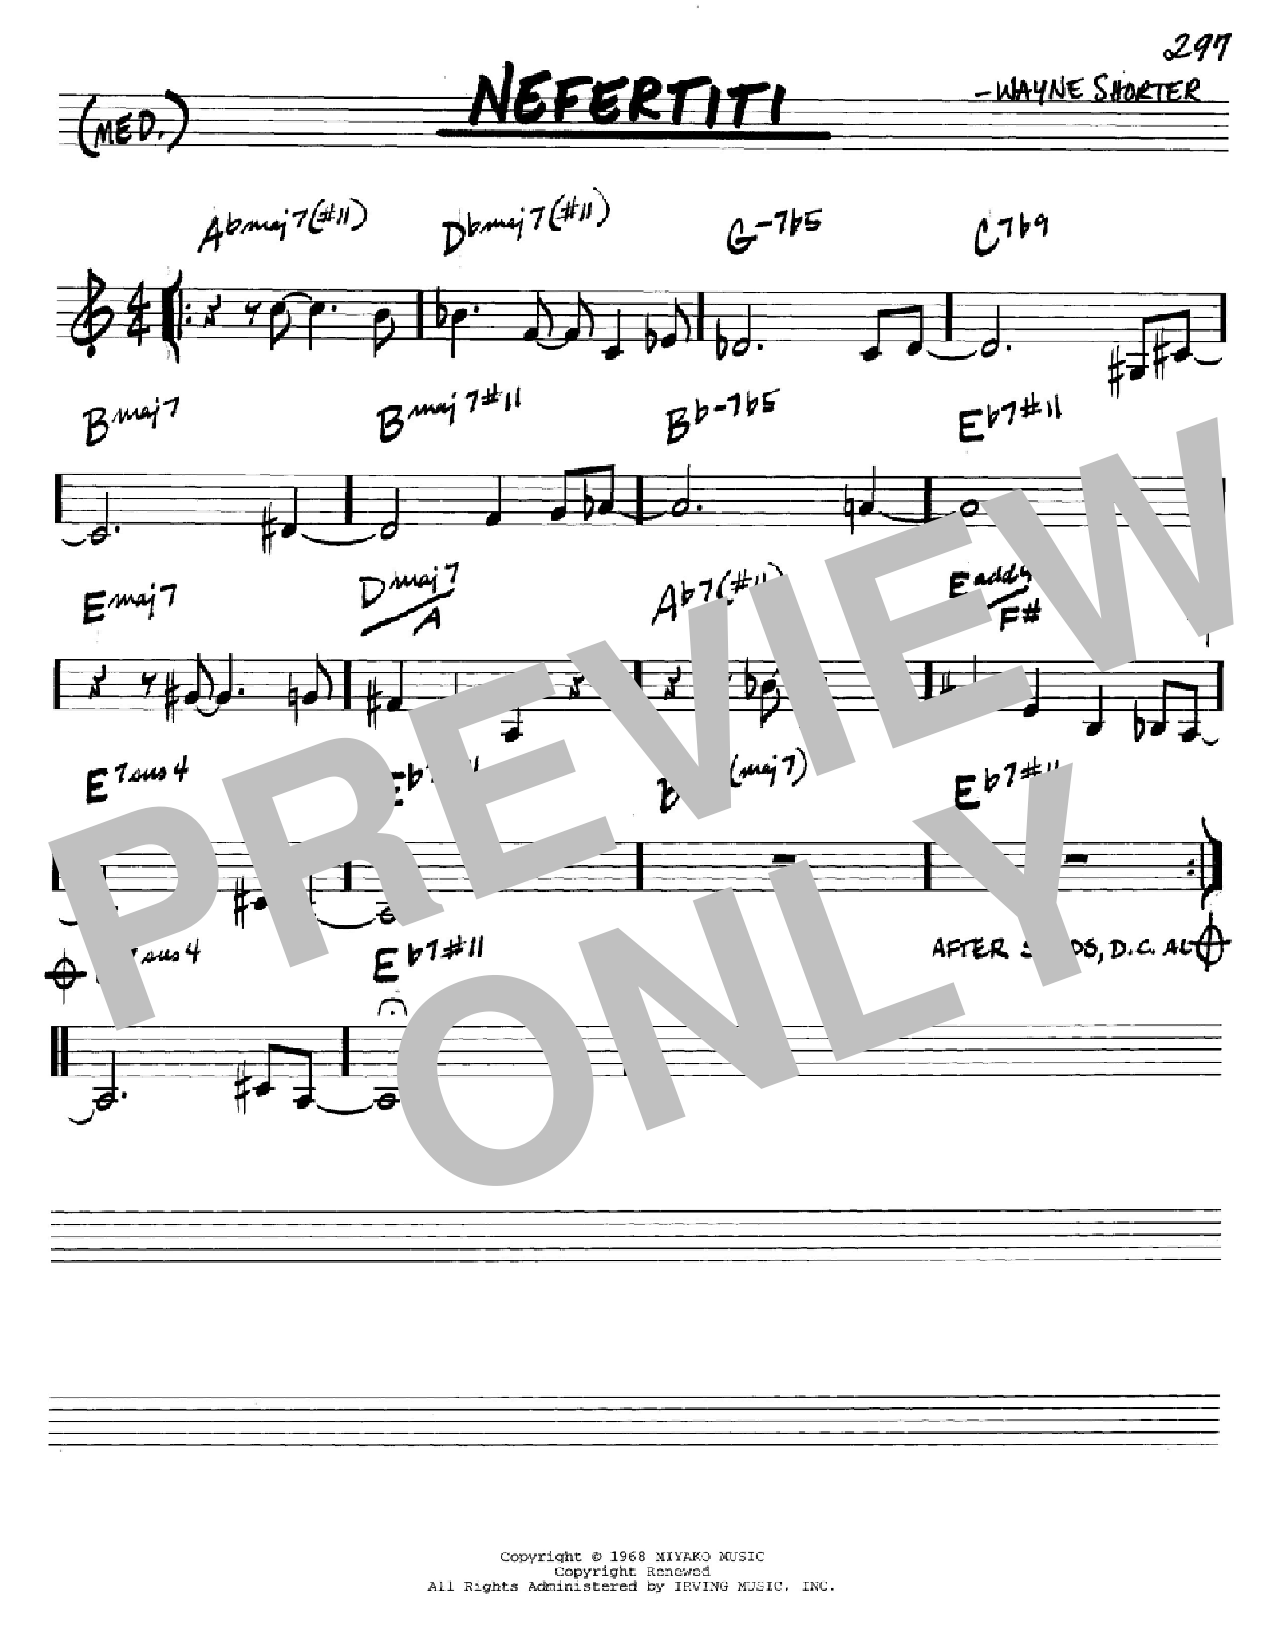 Wayne Shorter Nefertiti Sheet Music Notes & Chords for Real Book - Melody & Chords - C Instruments - Download or Print PDF